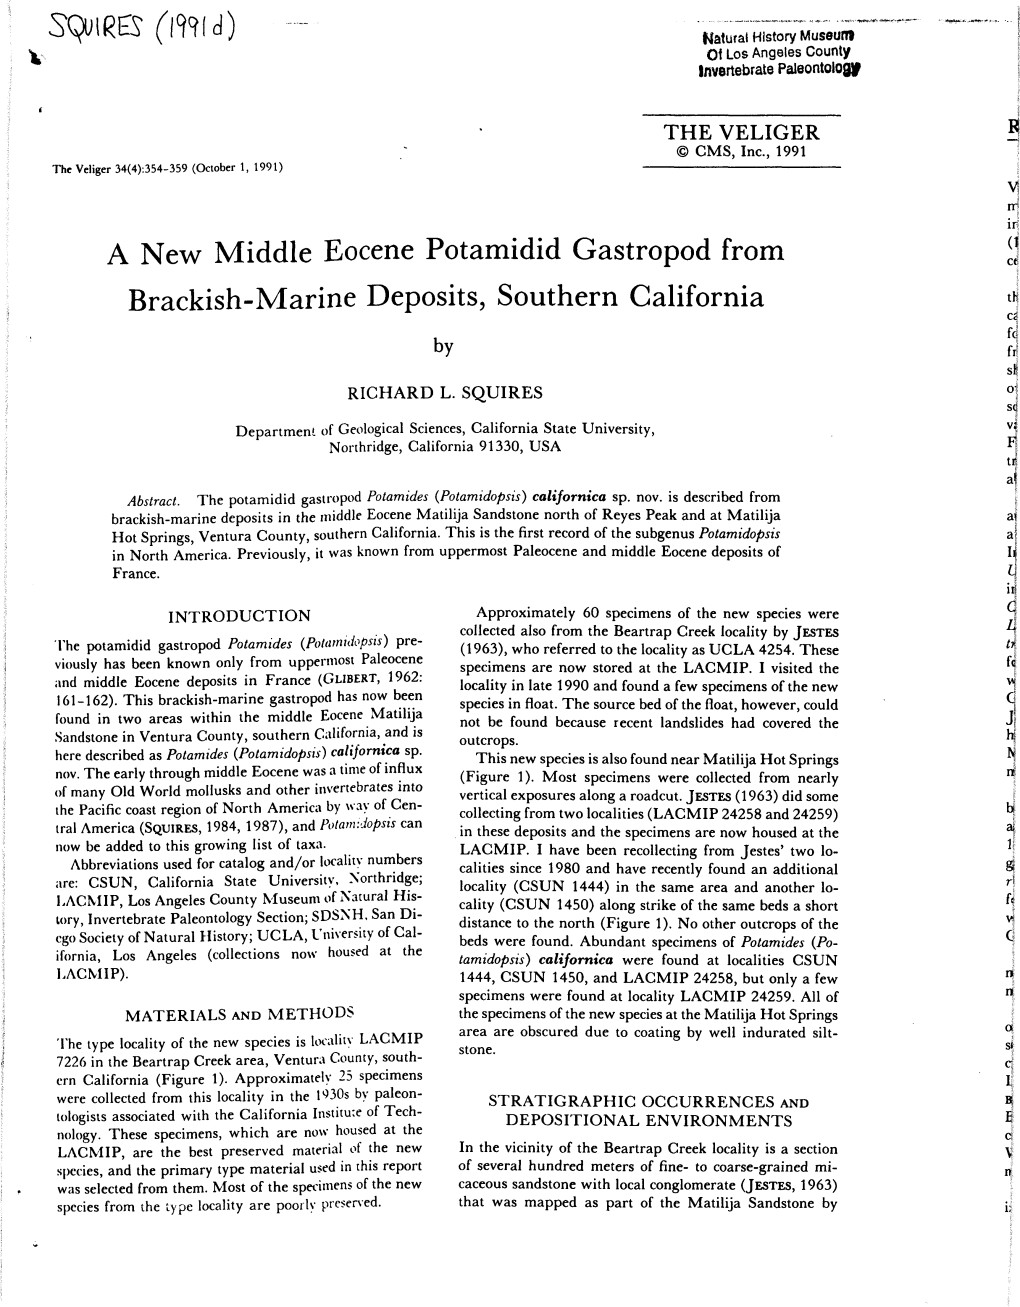 A New Middle Eocene Potamidid Gastropod from Brackish-Marine Deposits, Southern California